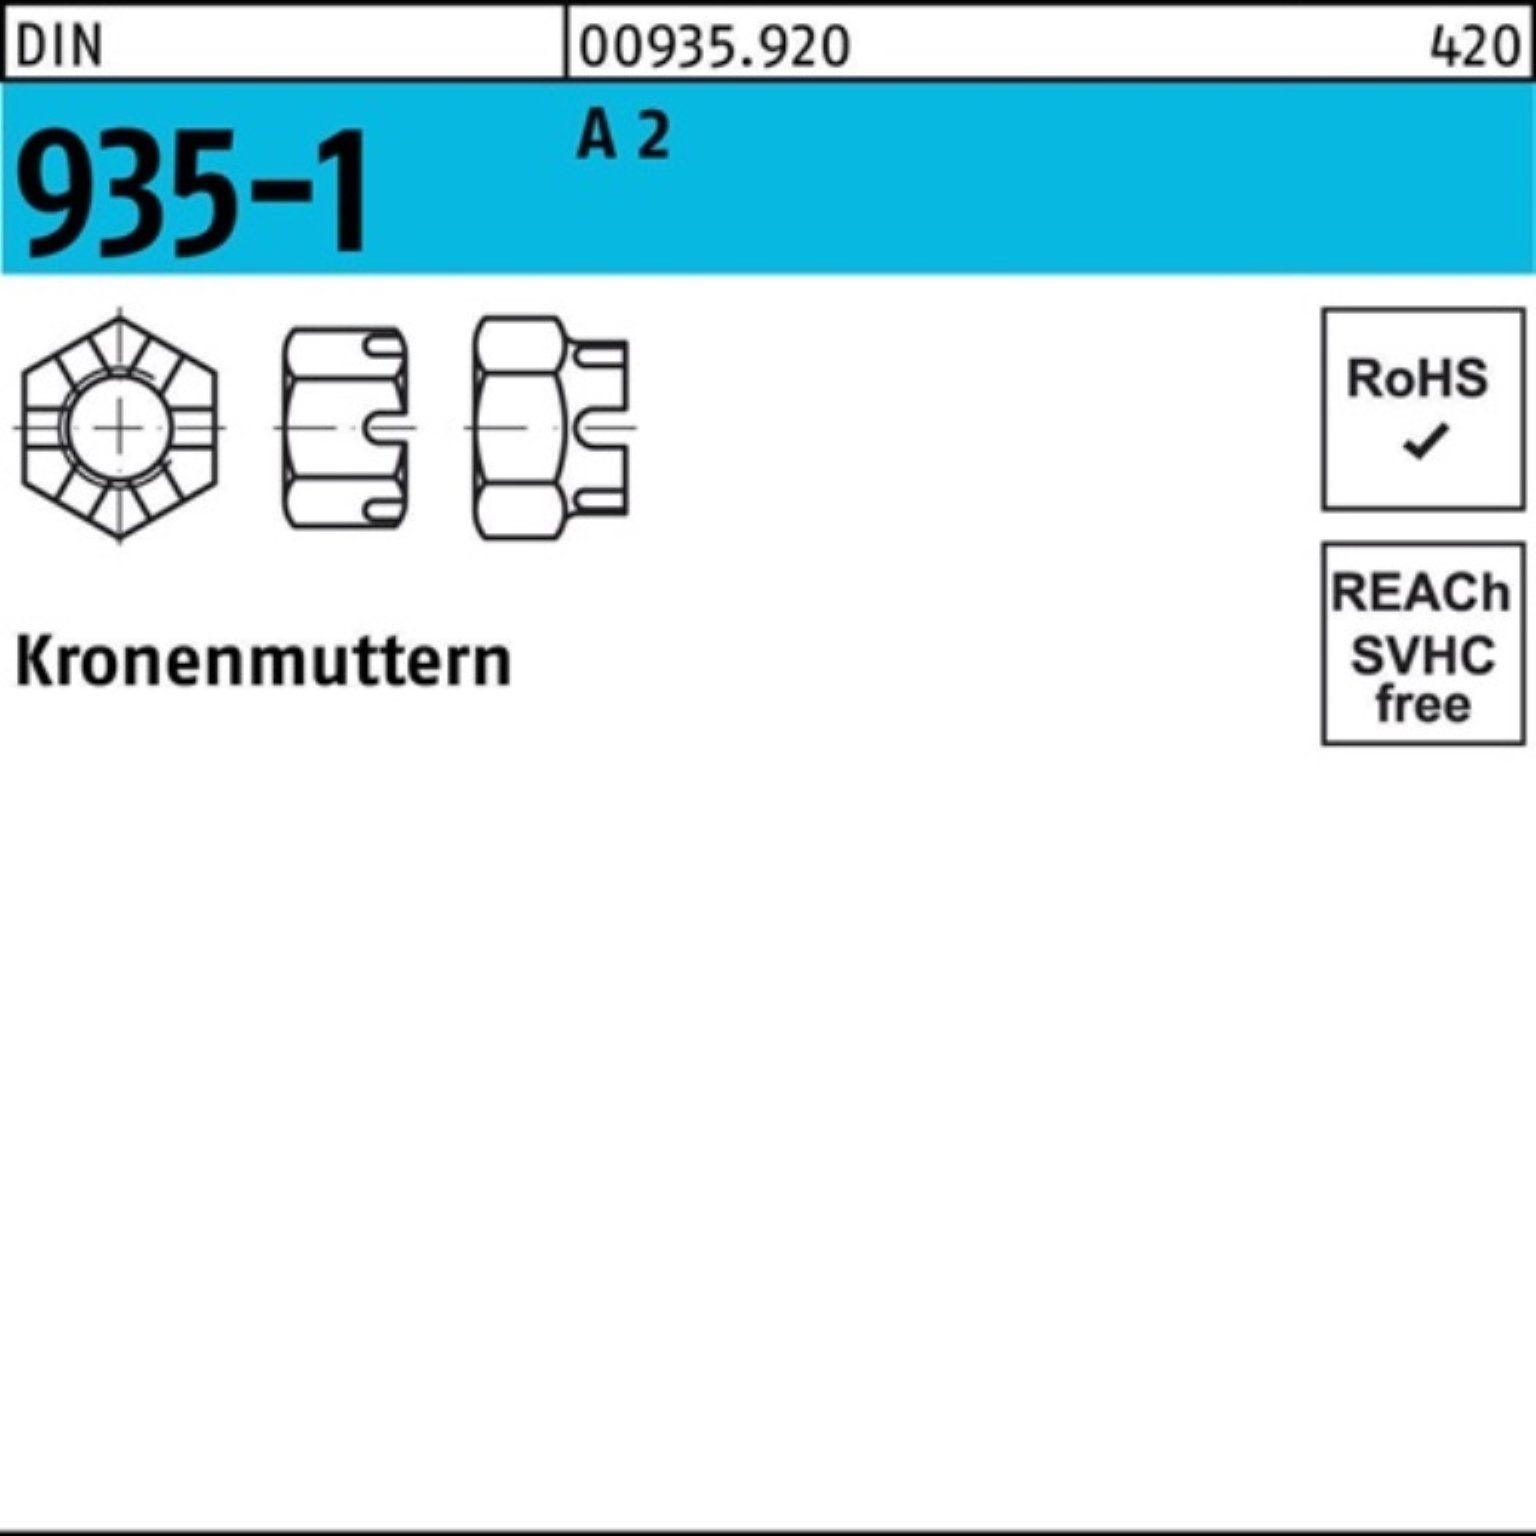 Reyher Kronenmutter 100er Pack Kronenmutter DIN 935-1 M20 A 2 1 Stück DIN 935-1 A 2 Krone